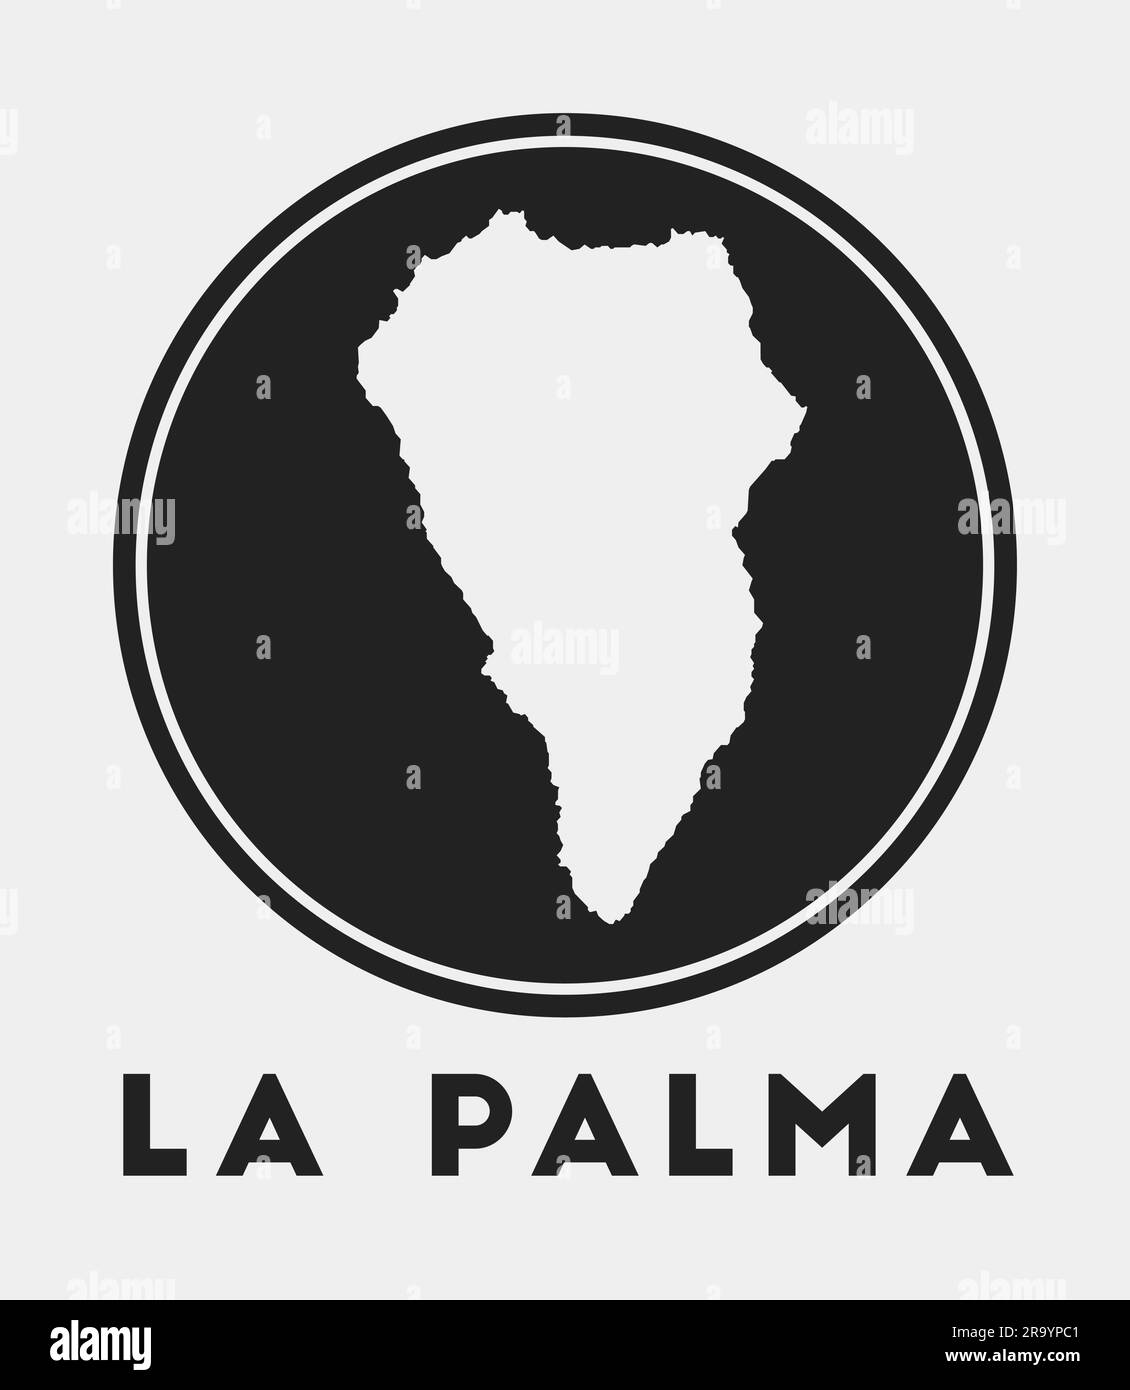 La Palma icon. Round logo with island map and title. Stylish La Palma badge with map. Vector illustration. Stock Vector